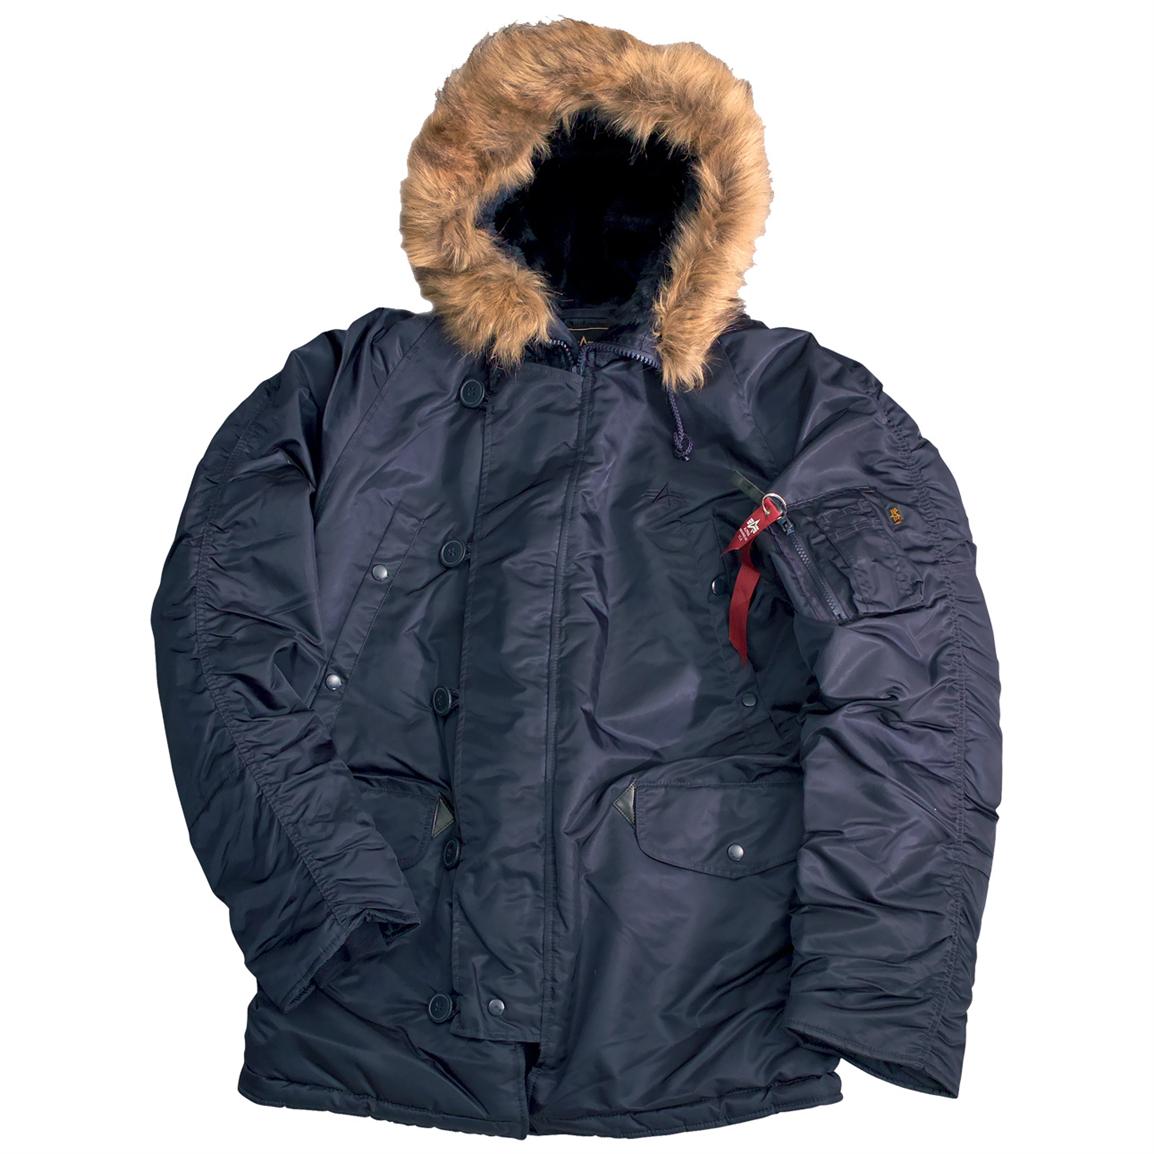 Men's Alpha® N - 3B™ Parka - 129688, Tactical Clothing at Sportsman's Guide